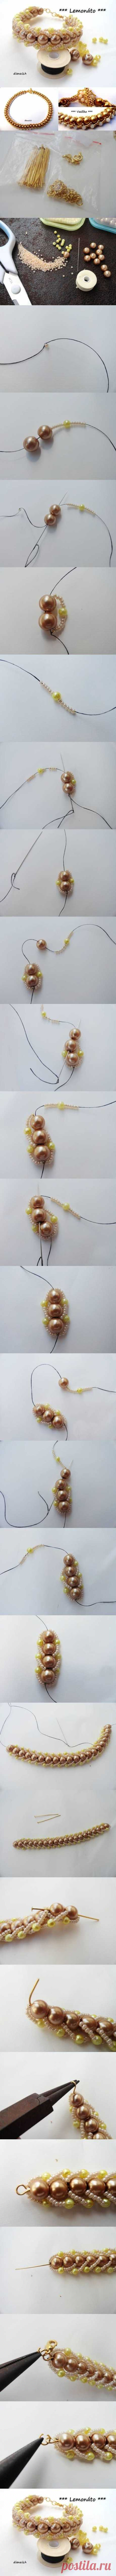 DIY Elegant Beads Bracelet | iCreativeIdeas.com